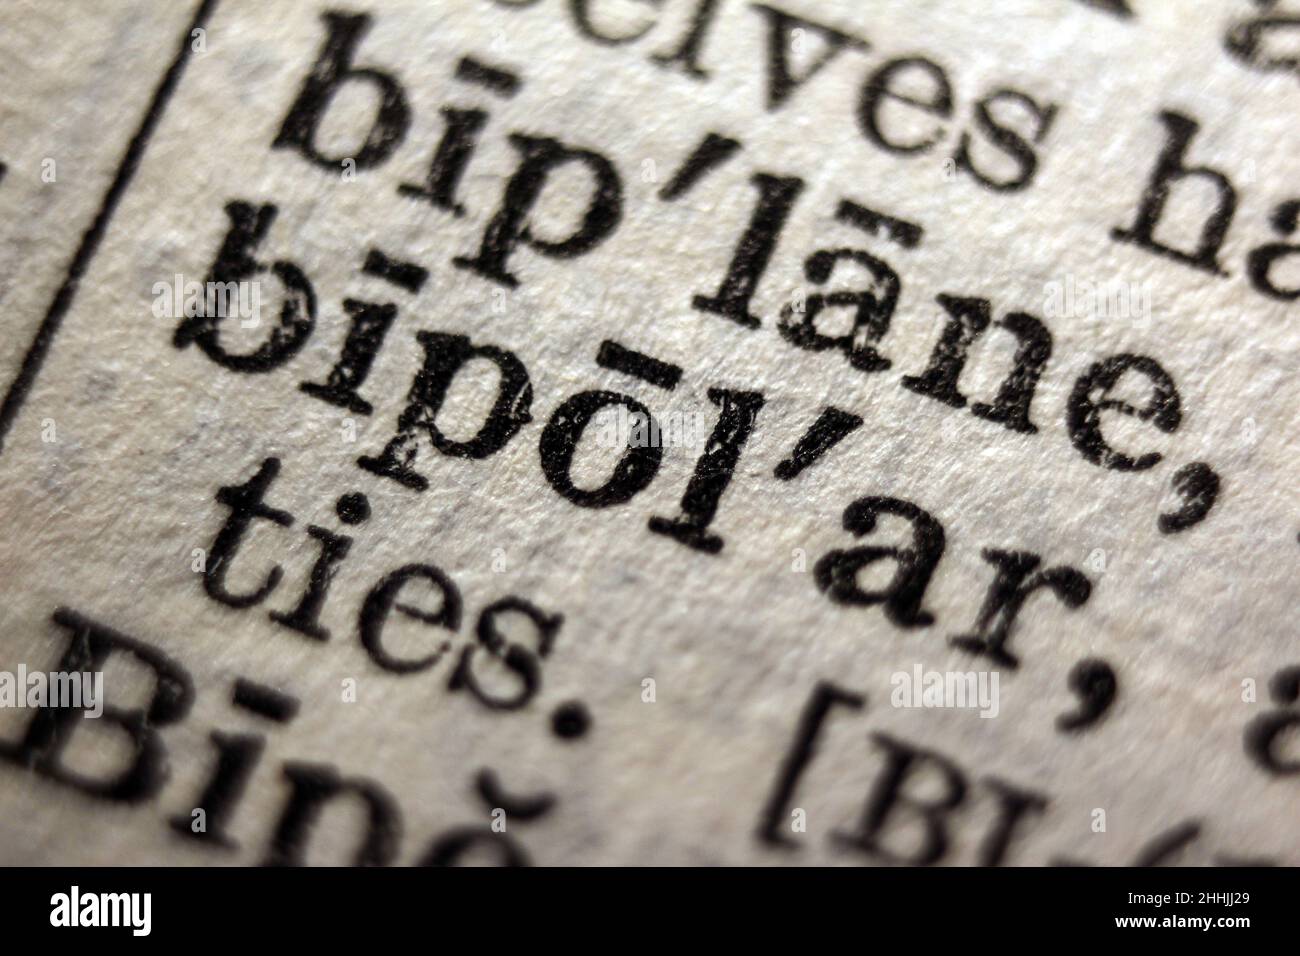 Word 'bipolar' printed on dictionary page, macro close-up Stock Photo